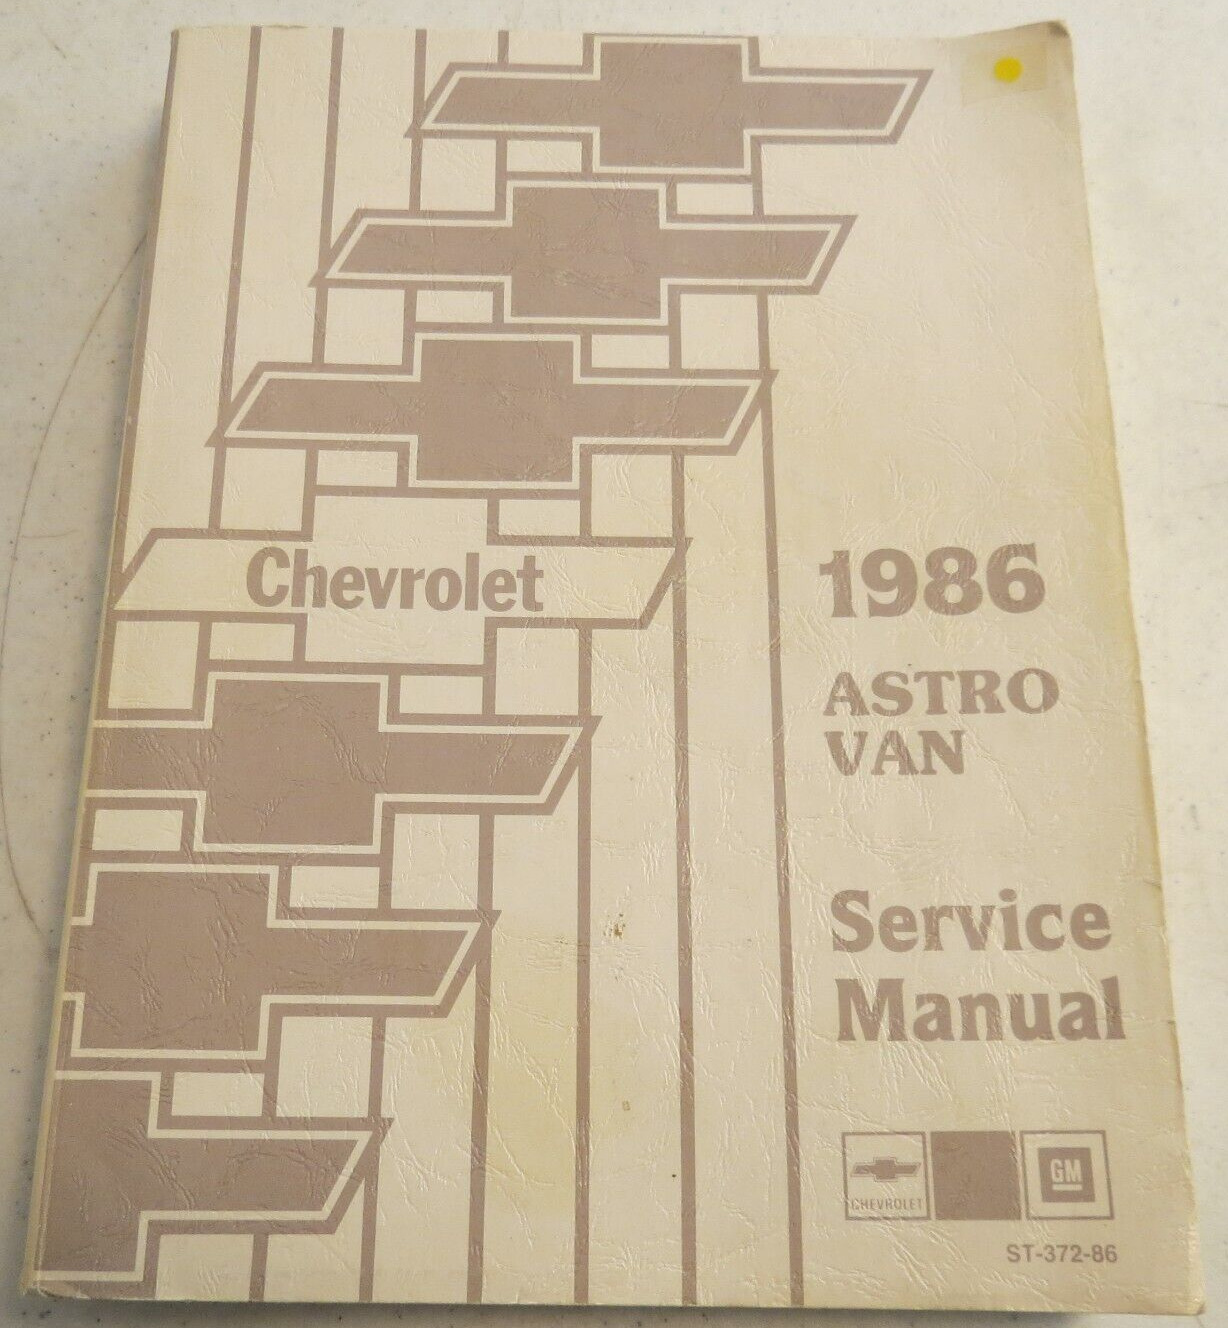 1986 CHEVROLET ASTRO VAN FACTORY SERVICE / SHOP MANUAL Car Auto Repair